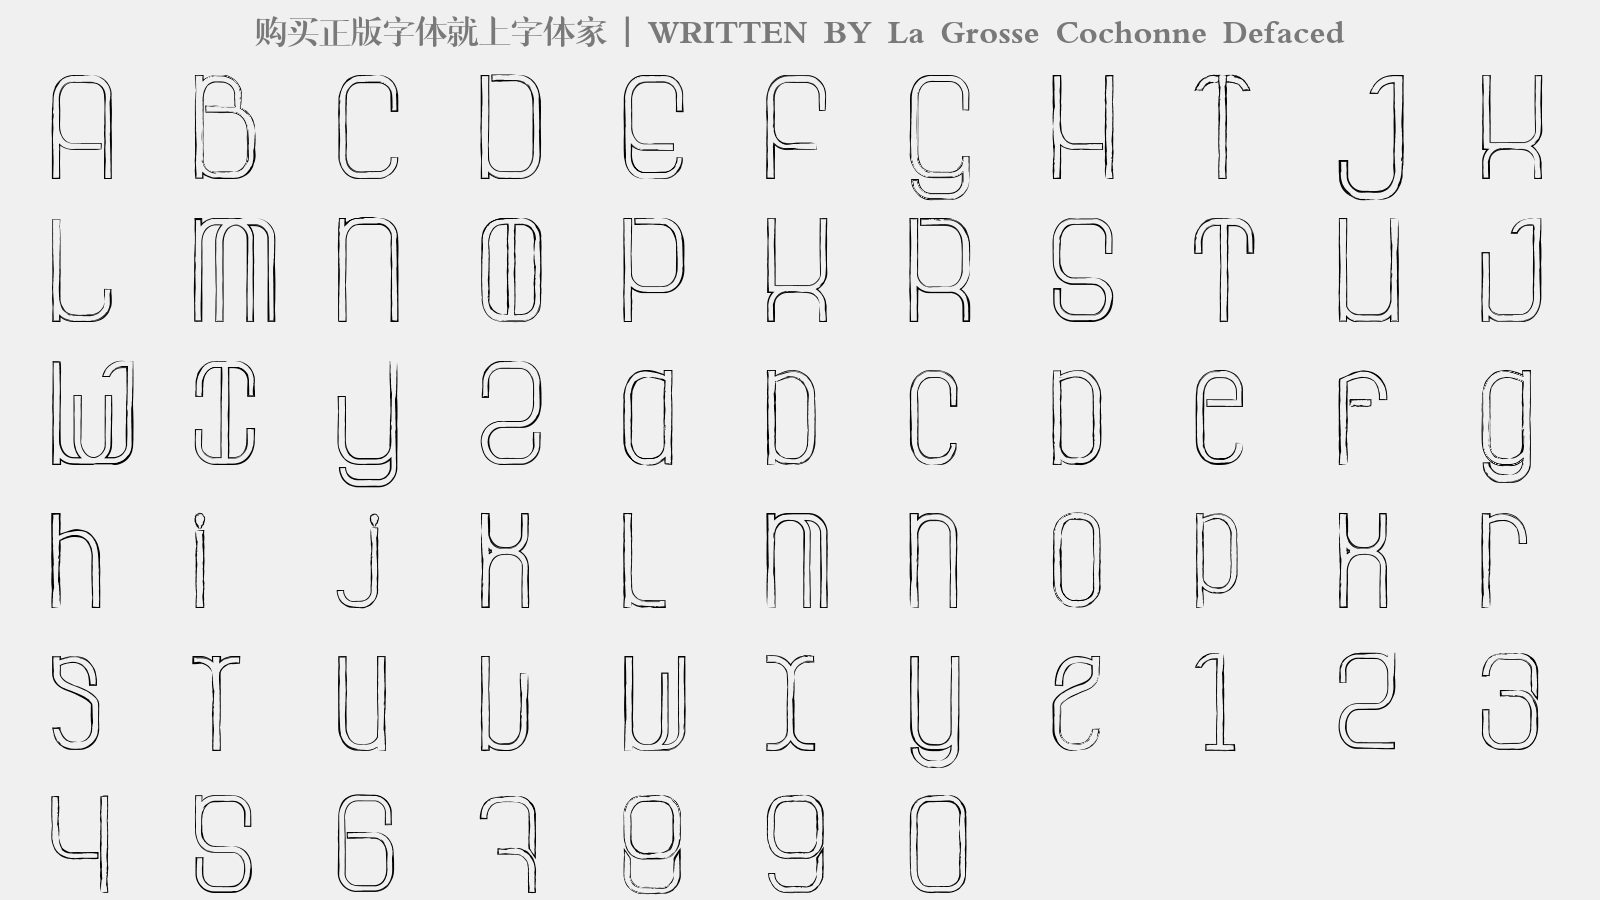 La Grosse Cochonne Defaced - 大写字母/小写字母/数字